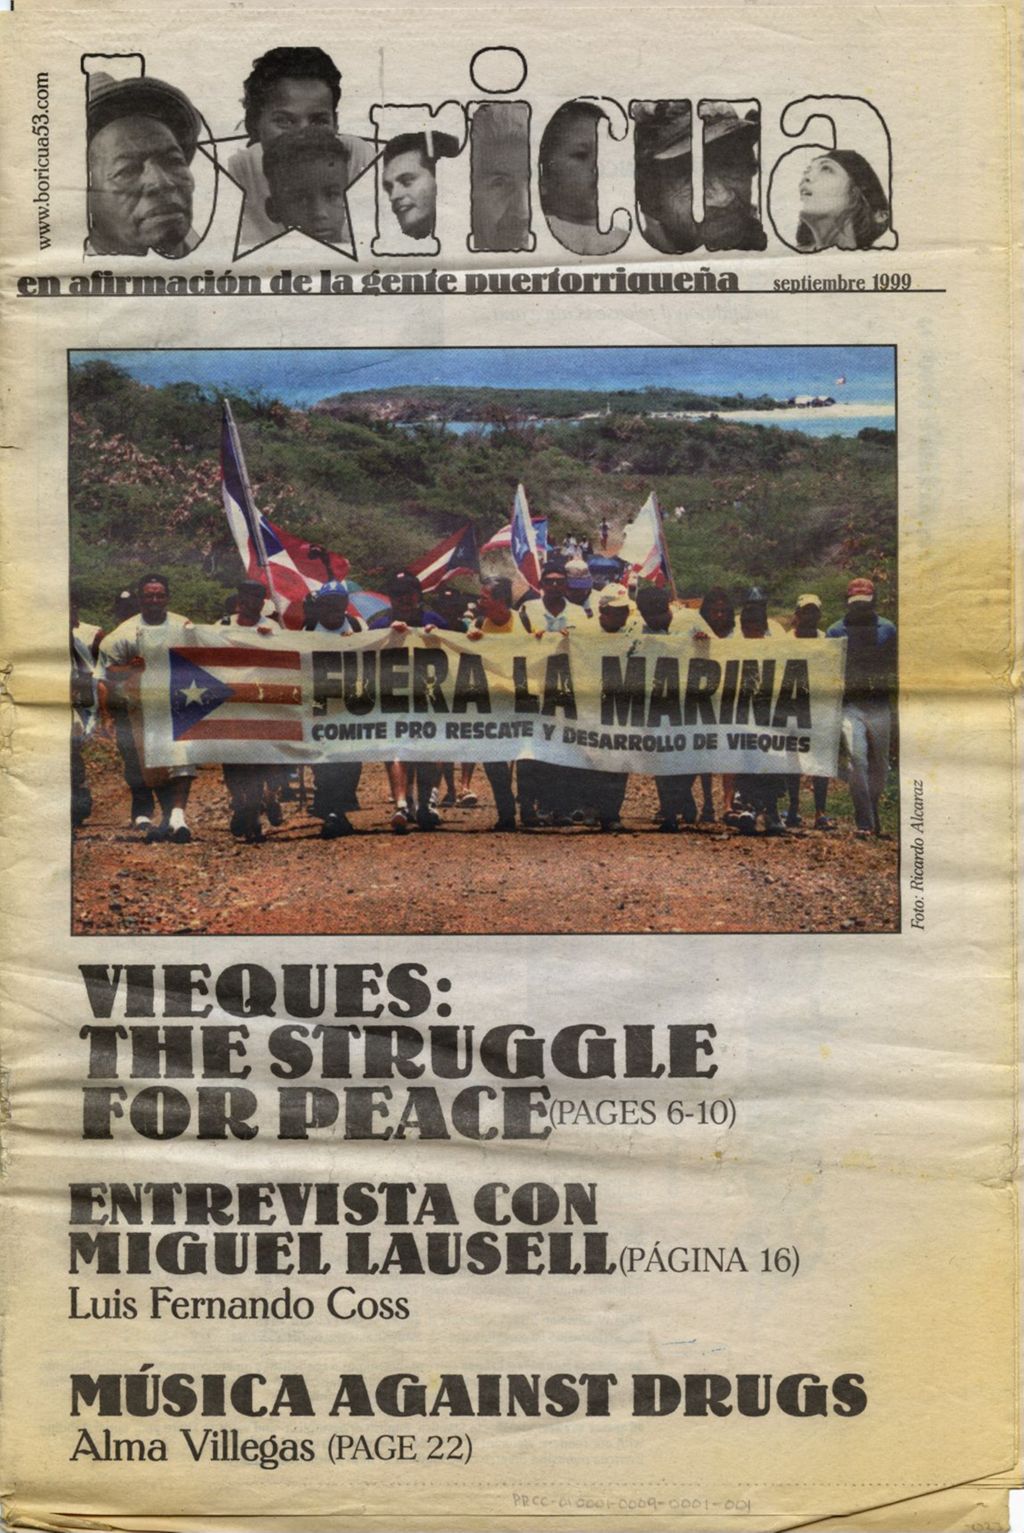 Miniature of Boricua en affirmació de la gente puertorriqueña; Septiembre 1999